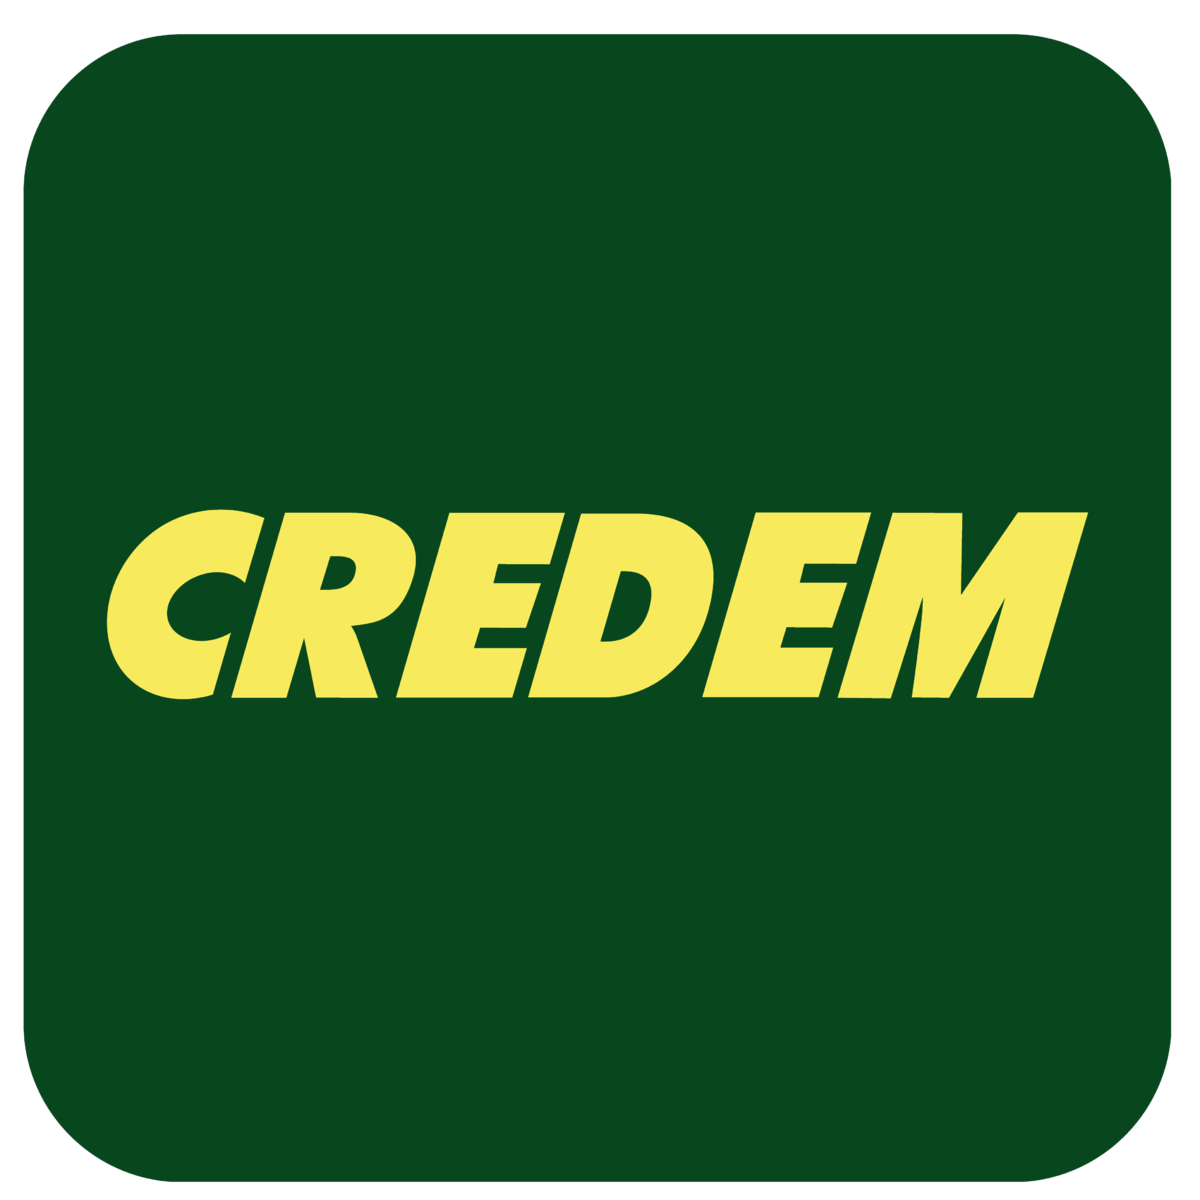 CREDEM Brand Logo